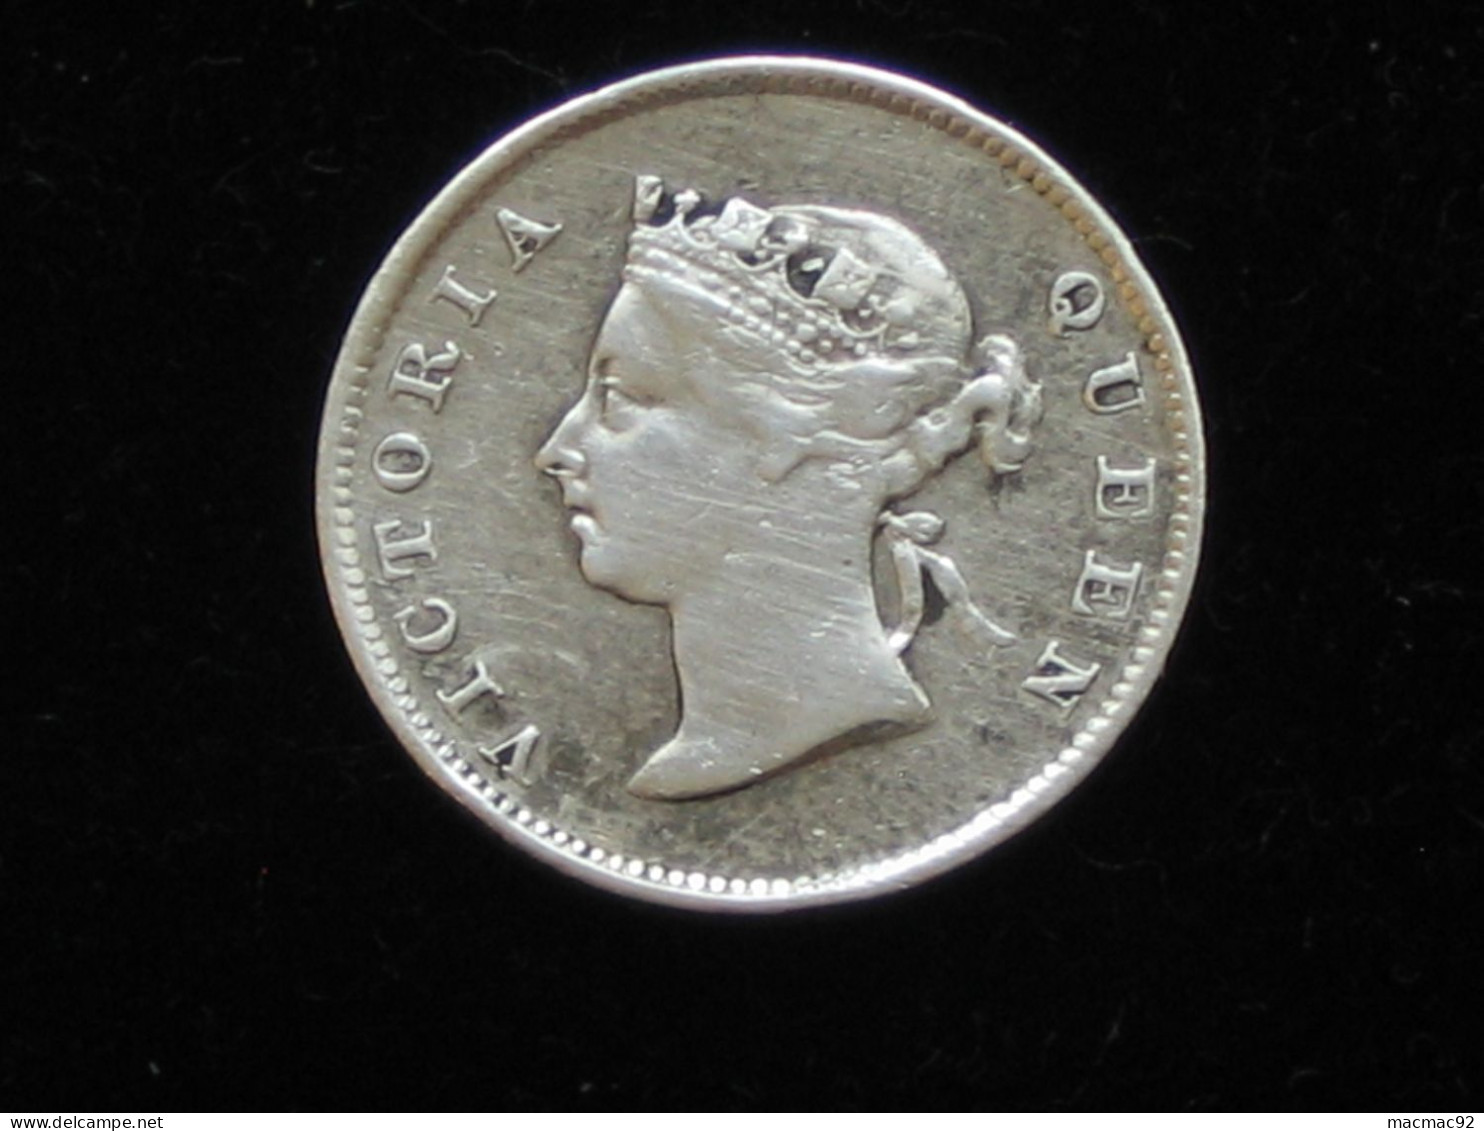 Grande Bretagne- British Guiana - West Indies  4 Four Pence 1891  Victoria Queen   ***** EN ACHAT IMMEDIAT ***** - Colonies